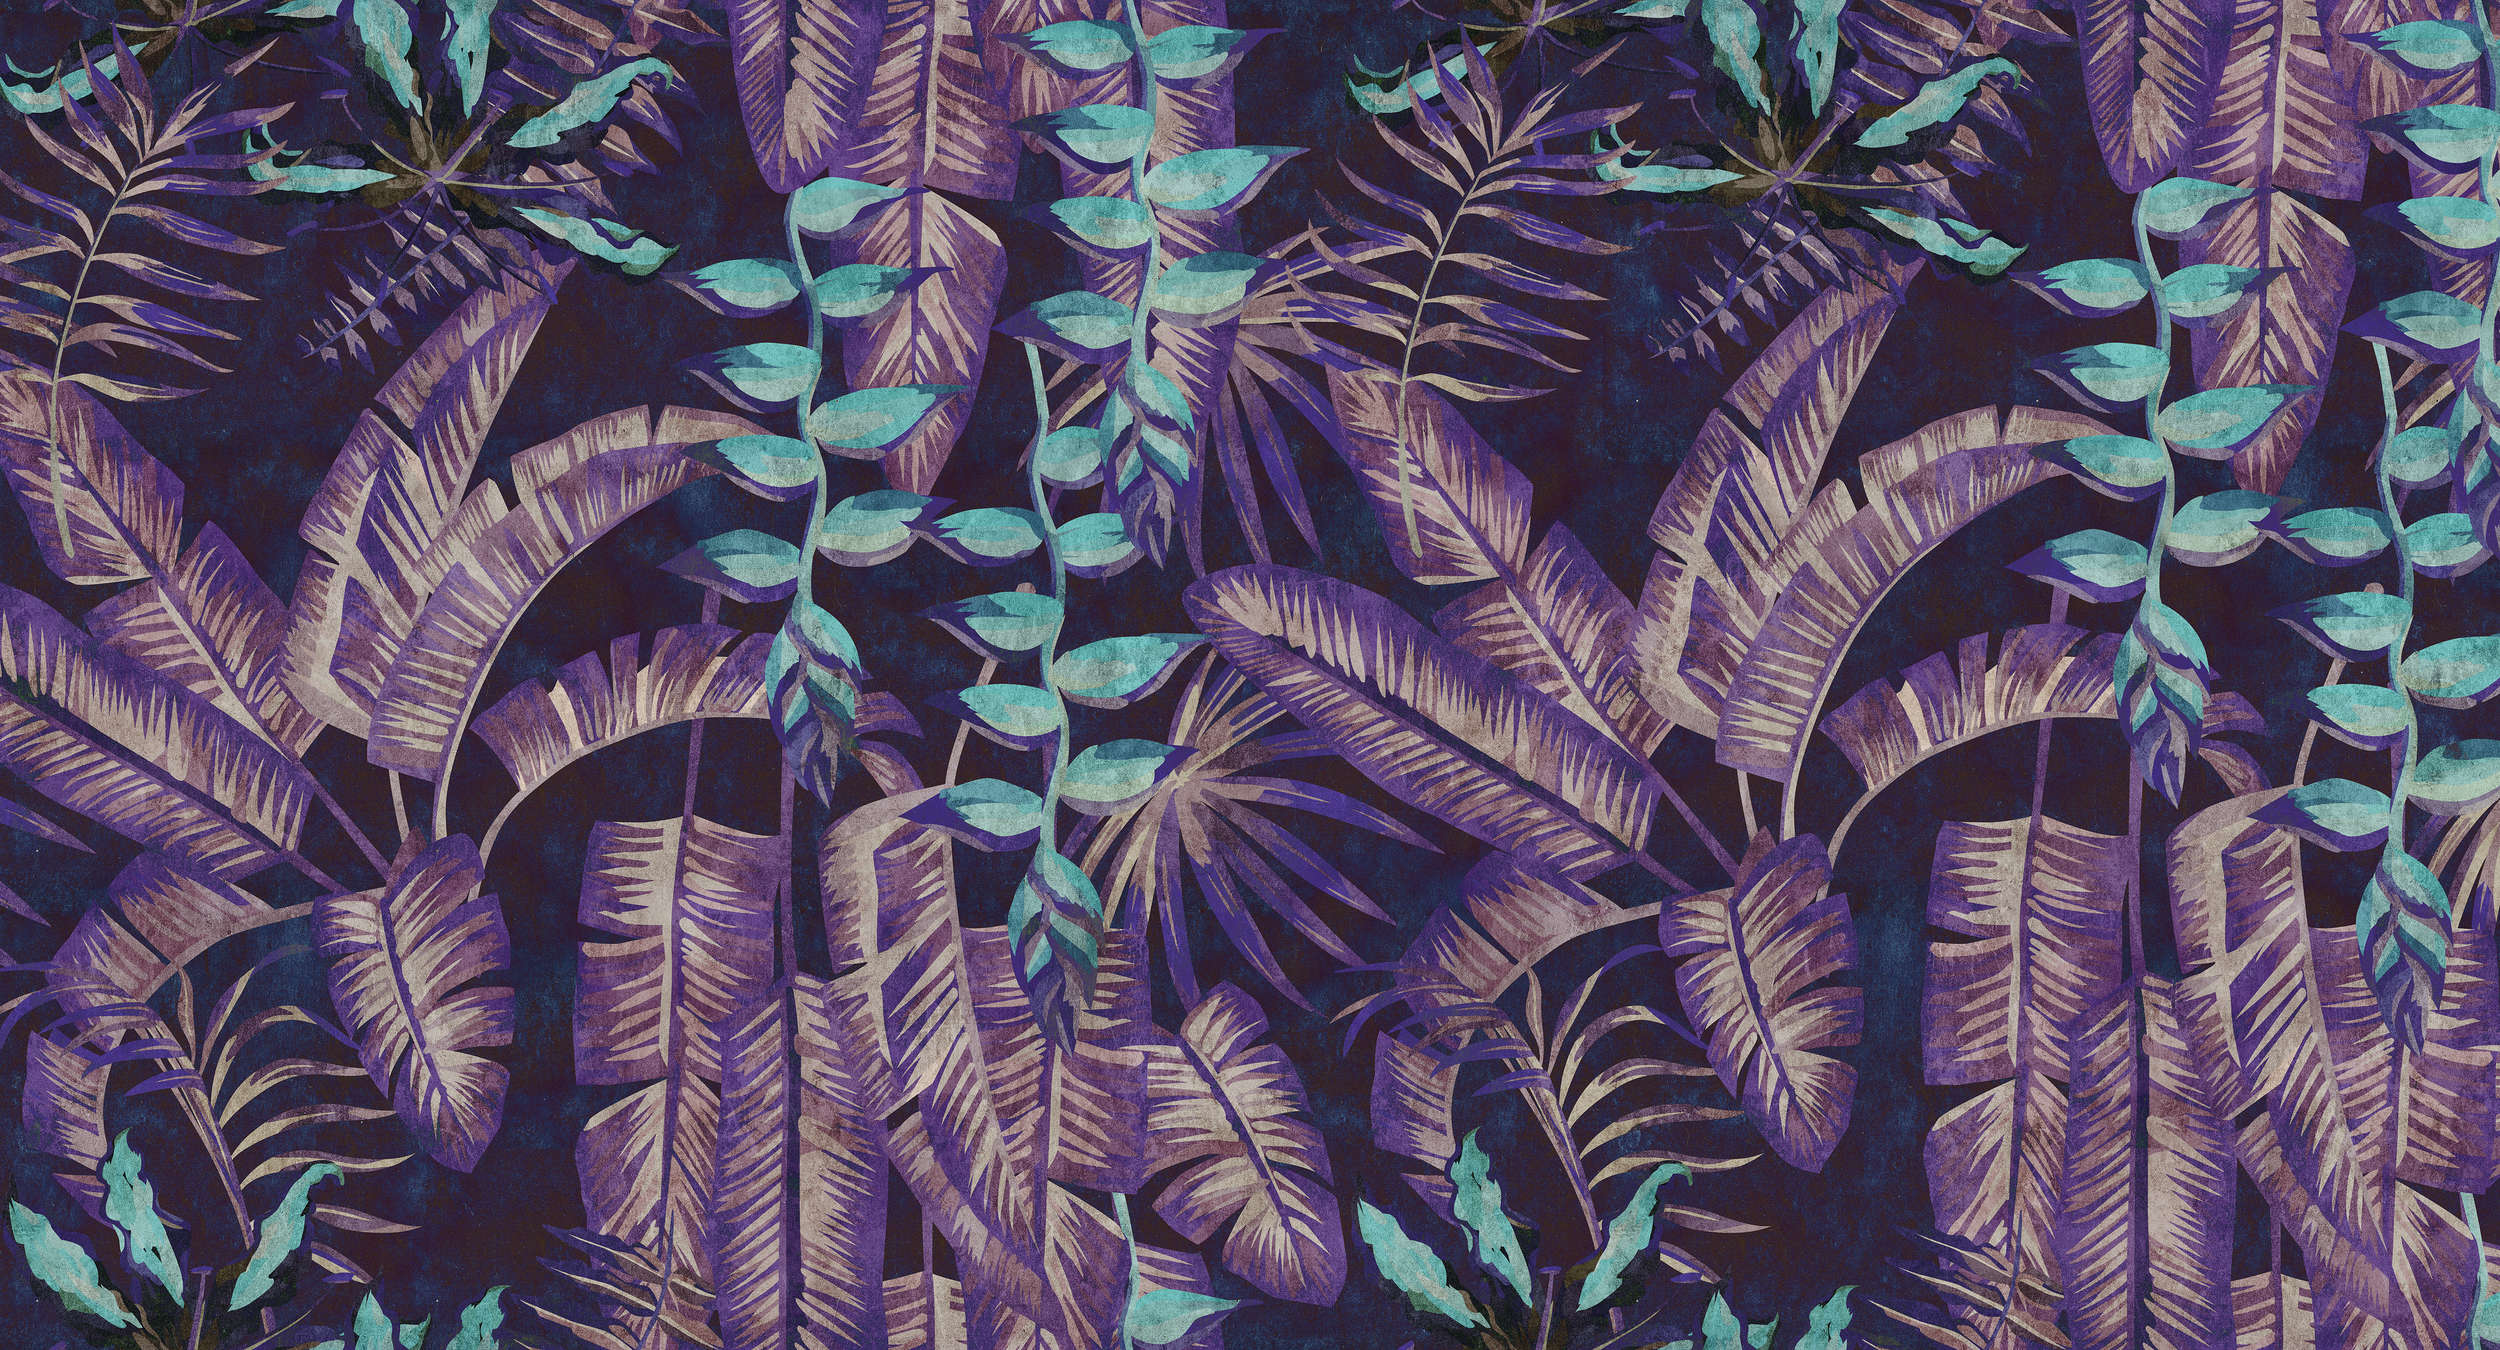             Tropicana 6 - papel pintado con impresión digital en textura papel secante con motivo selva - turquesa, violeta | premium liso no tejido
        